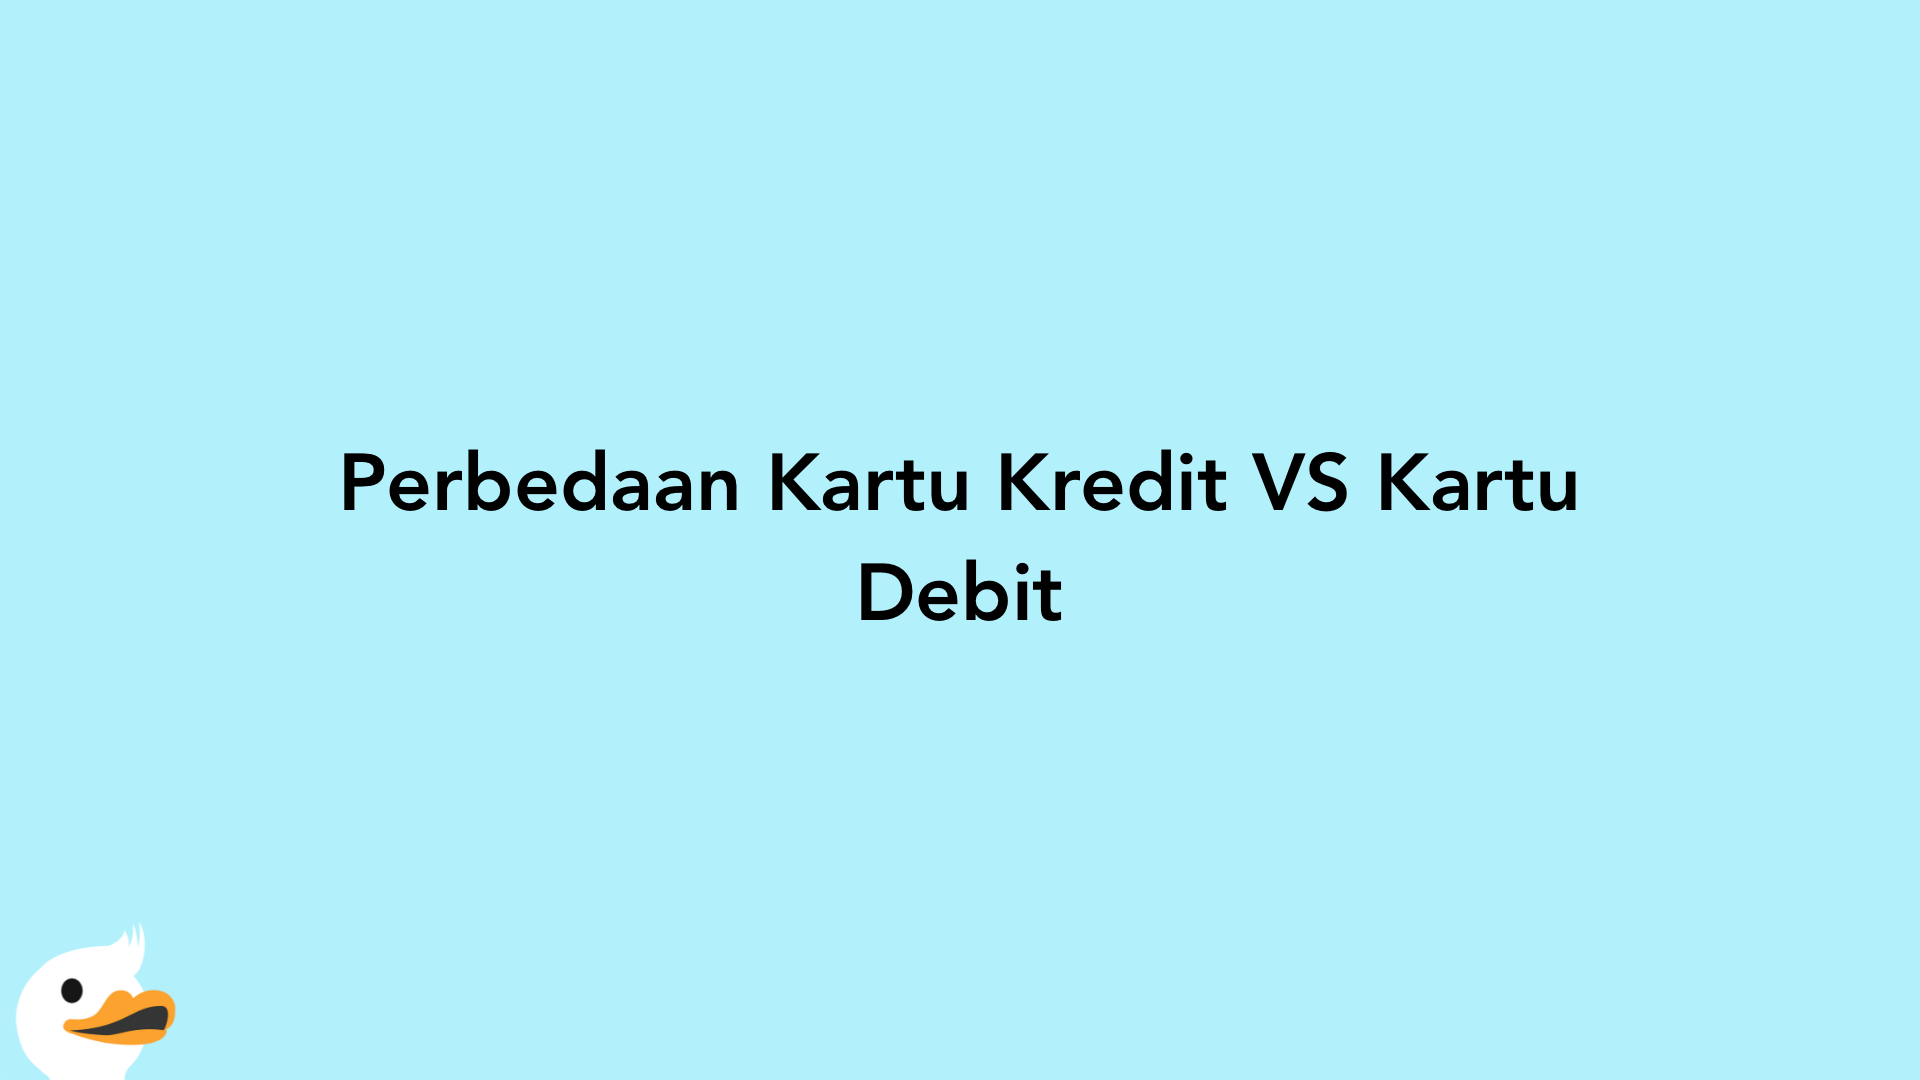 Perbedaan Kartu Kredit VS Kartu Debit